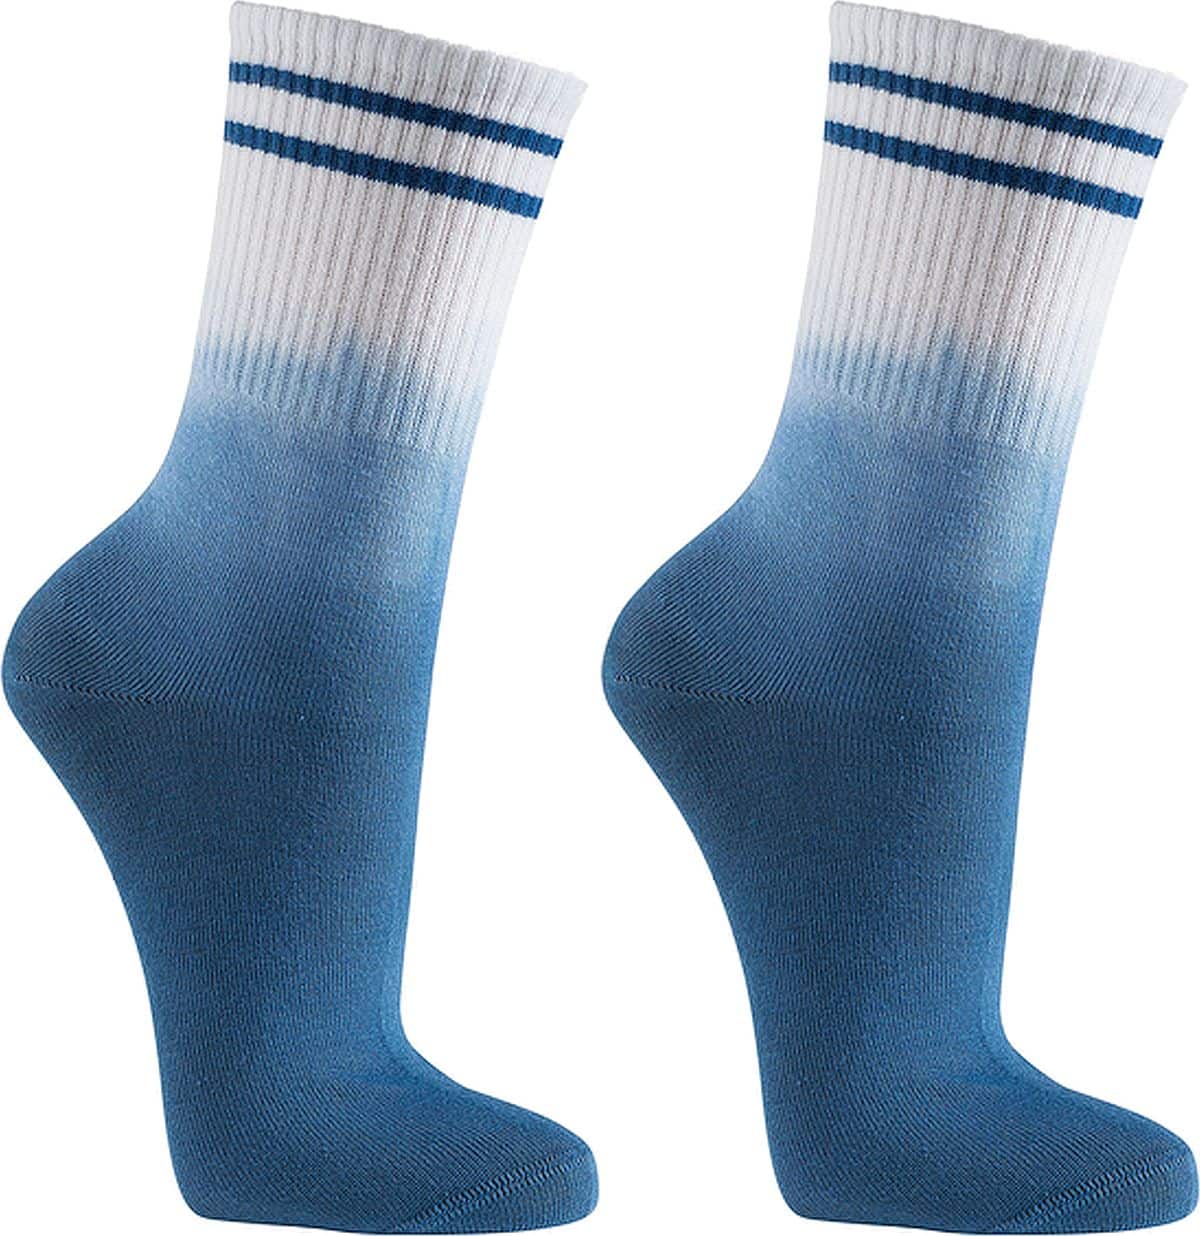  Crew Socks Socken Batik für Teenager, Damen und Herren 2 Paar/ 1 Dessin